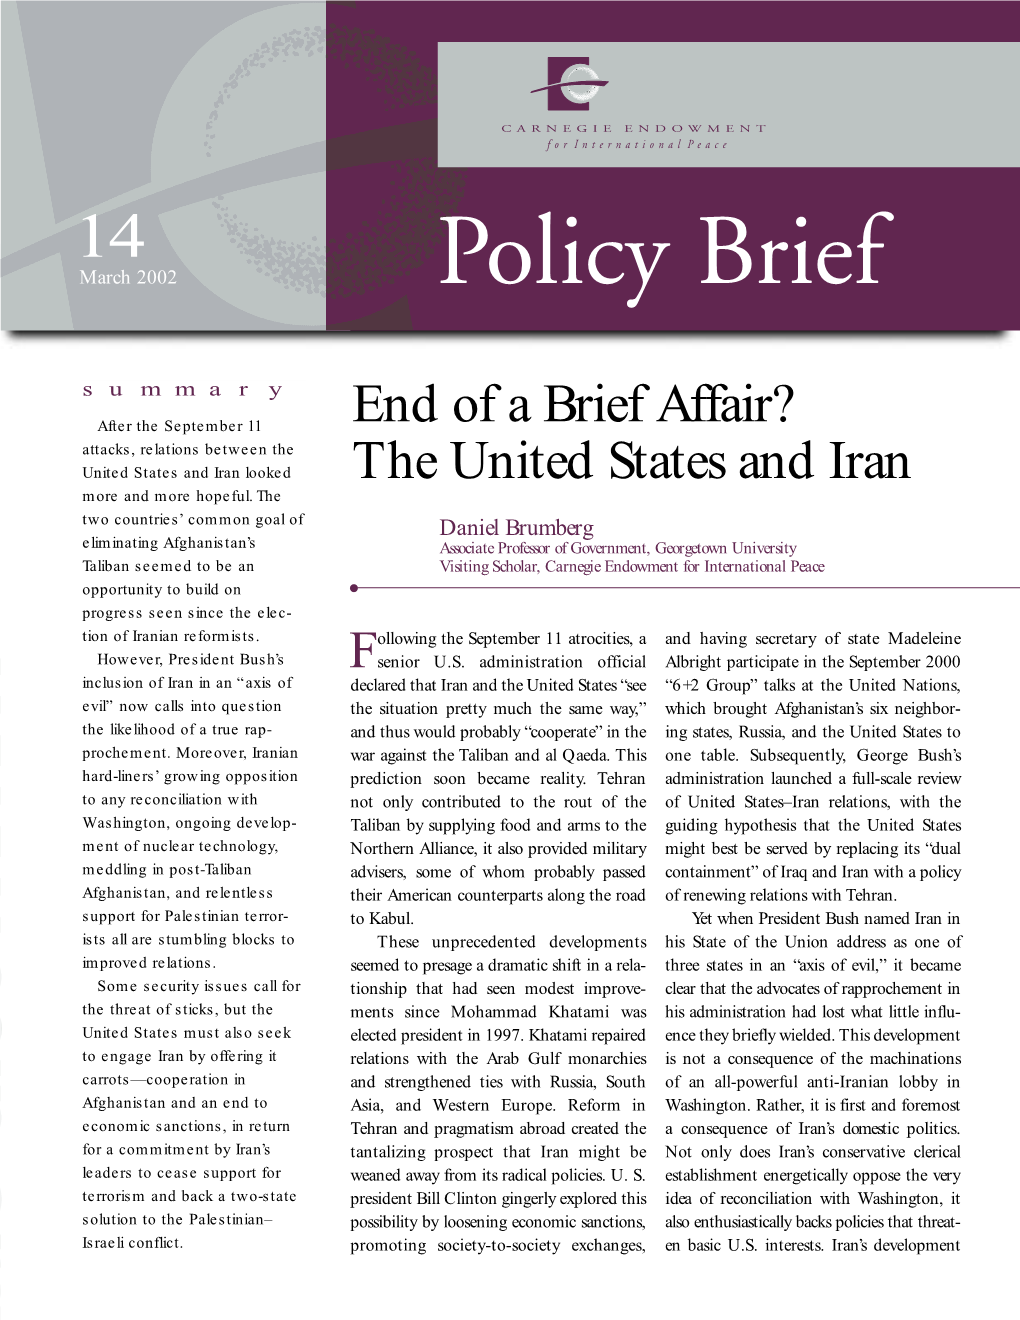 Policy Brief #14/Prnt